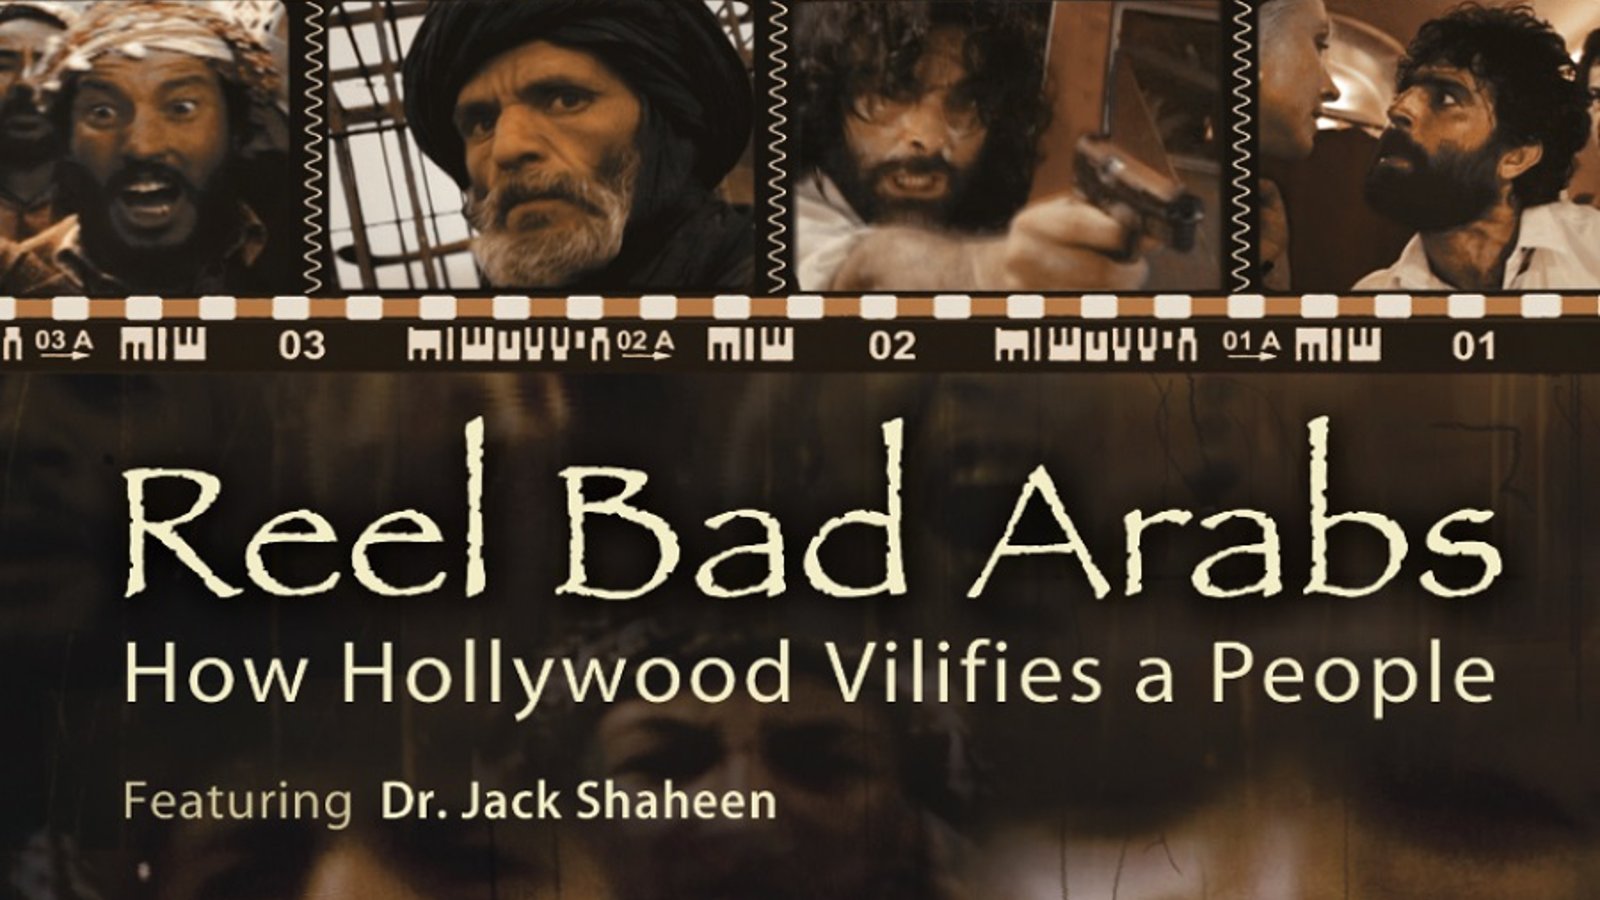 Reel Bad Arabs - How Hollywood Vilifies a People